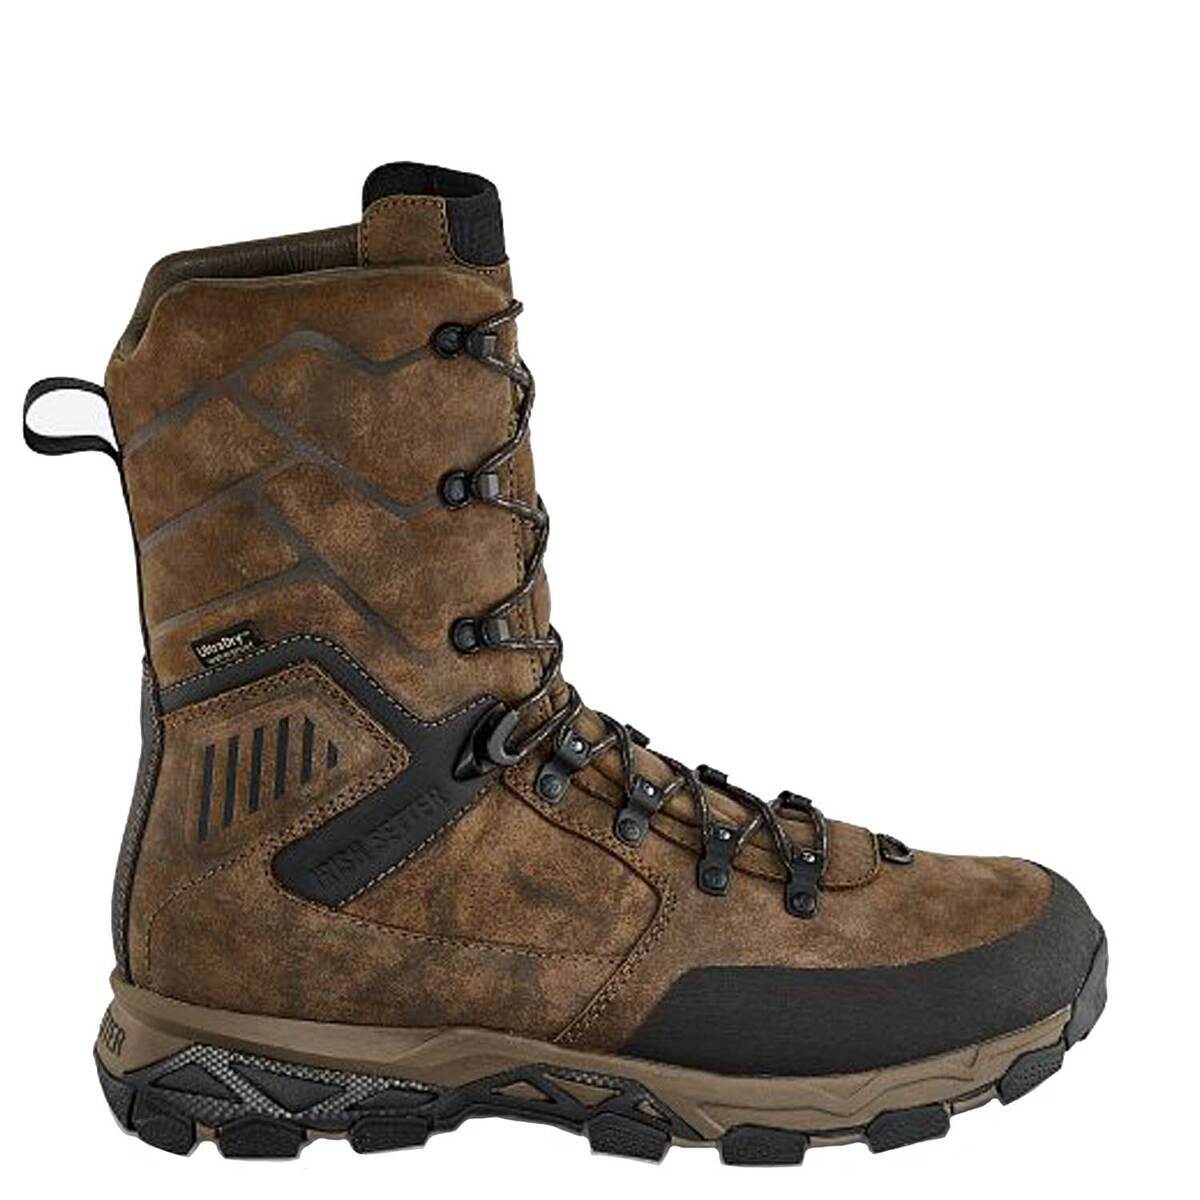 Irish Setter Men's Pinnacle 11" Insulated Waterproof Hunting Boots - Desert Field 9.5EE - Desert Field 9.5 | Sportsman's